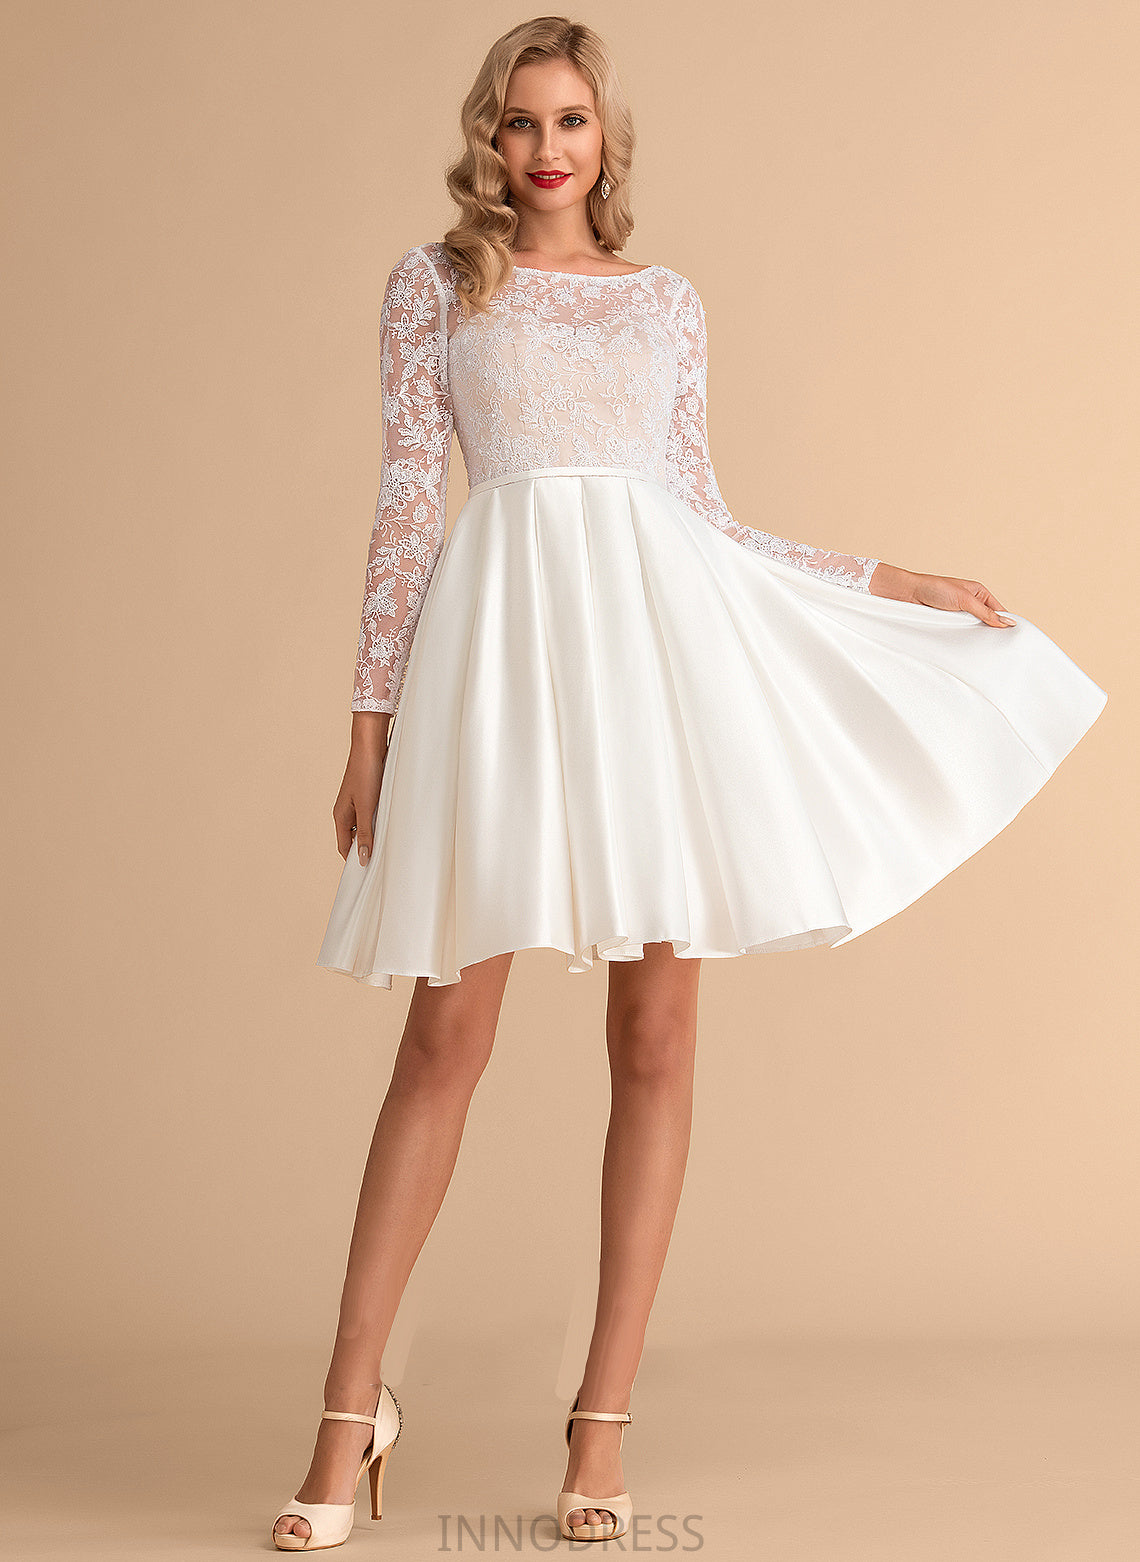 Lace Mariyah Ball-Gown/Princess Satin Neck Knee-Length Wedding Scoop Dress Wedding Dresses